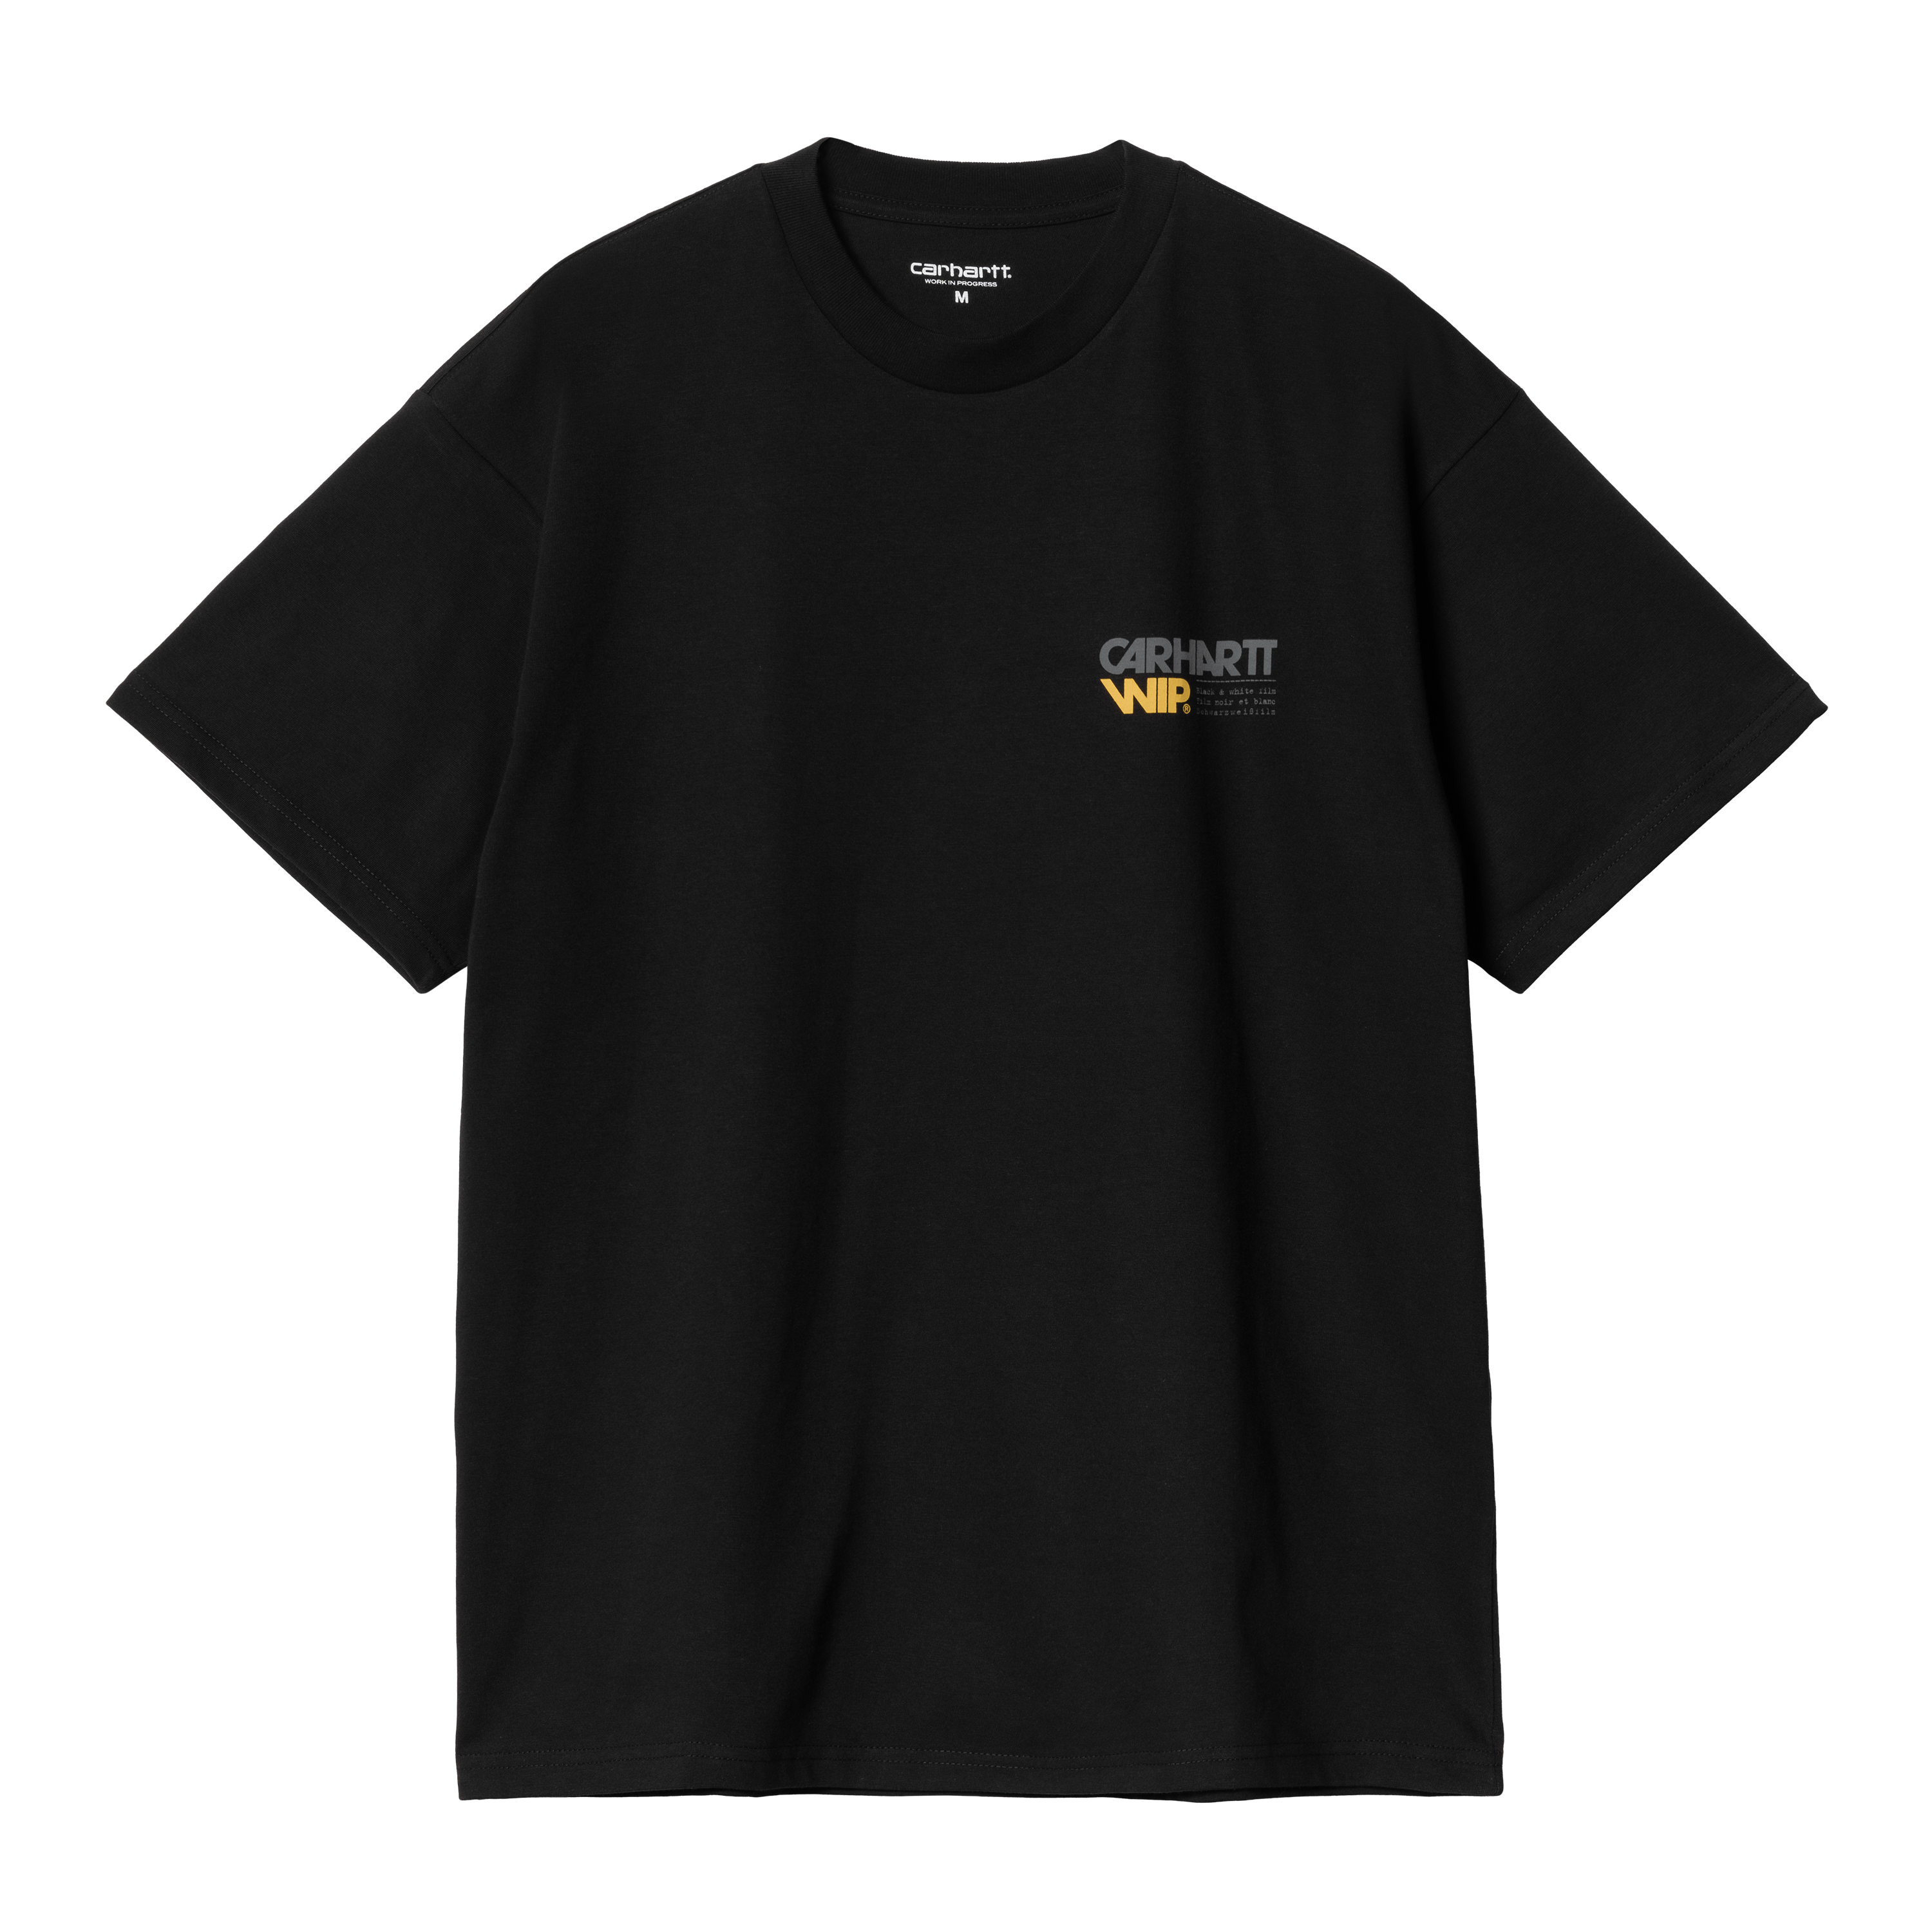 Carhartt WIP Short Sleeve Contact Sheet T-Shirt in Black